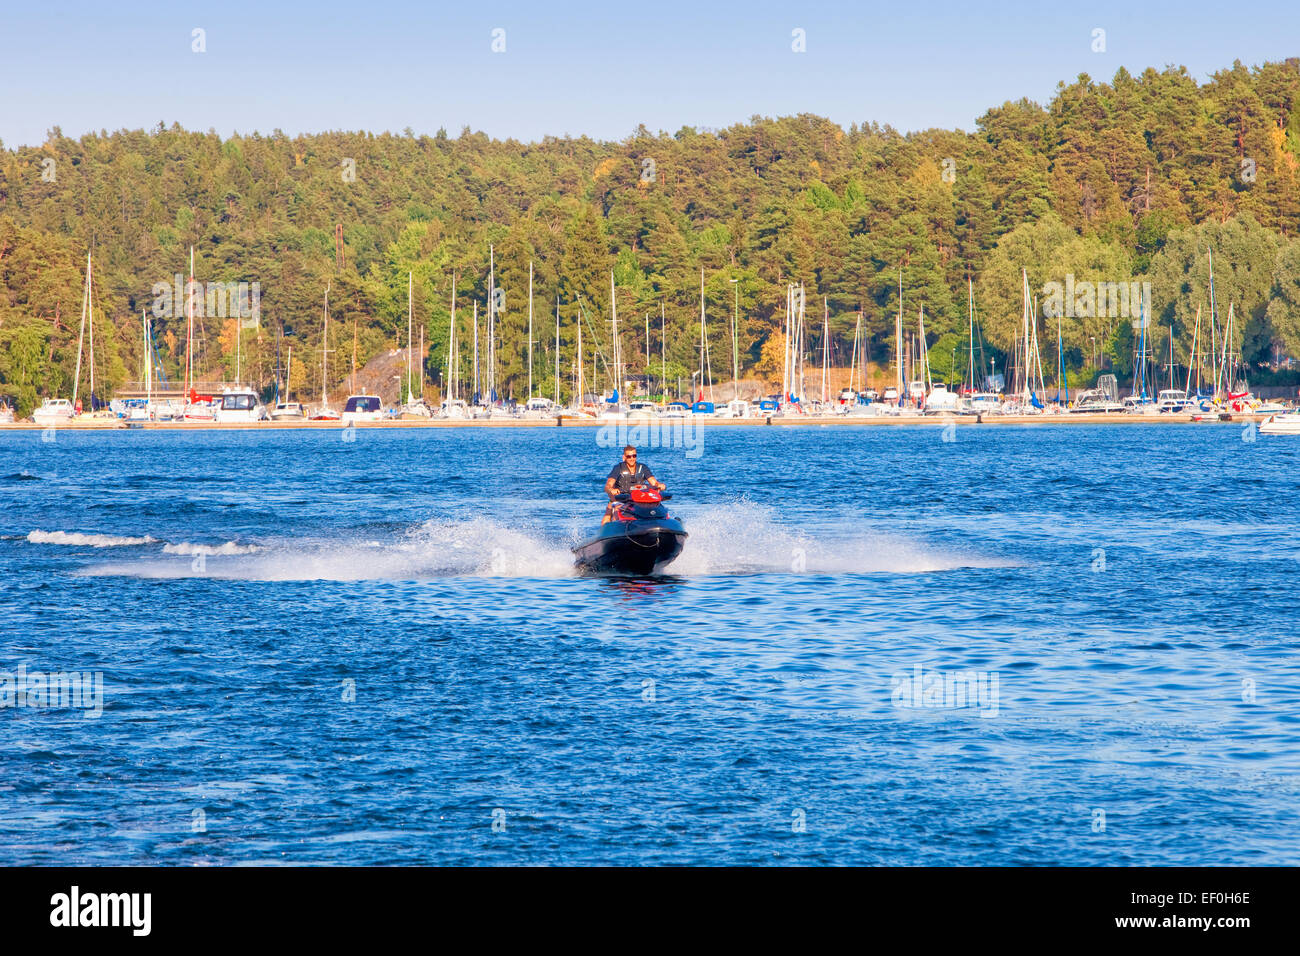 Sweden, Stockholm - Man riding personal watercraft jet ski in archipelago. Stock Photo